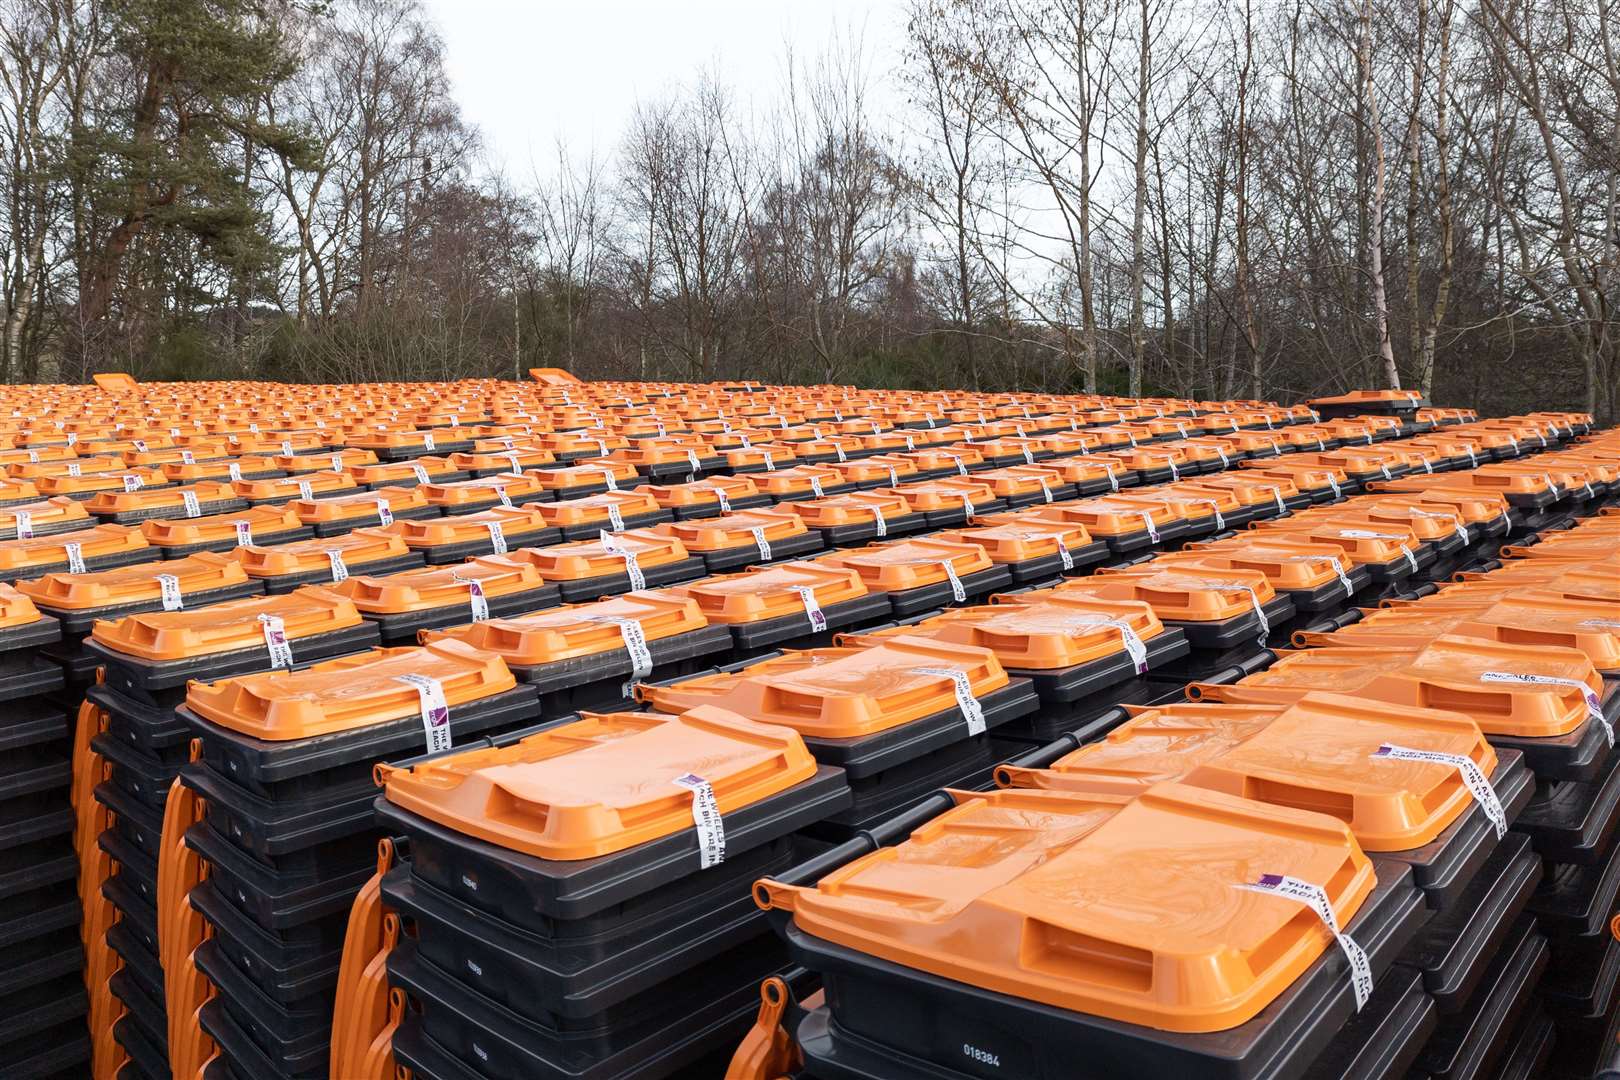 Trade customers will get an extra orange bin.